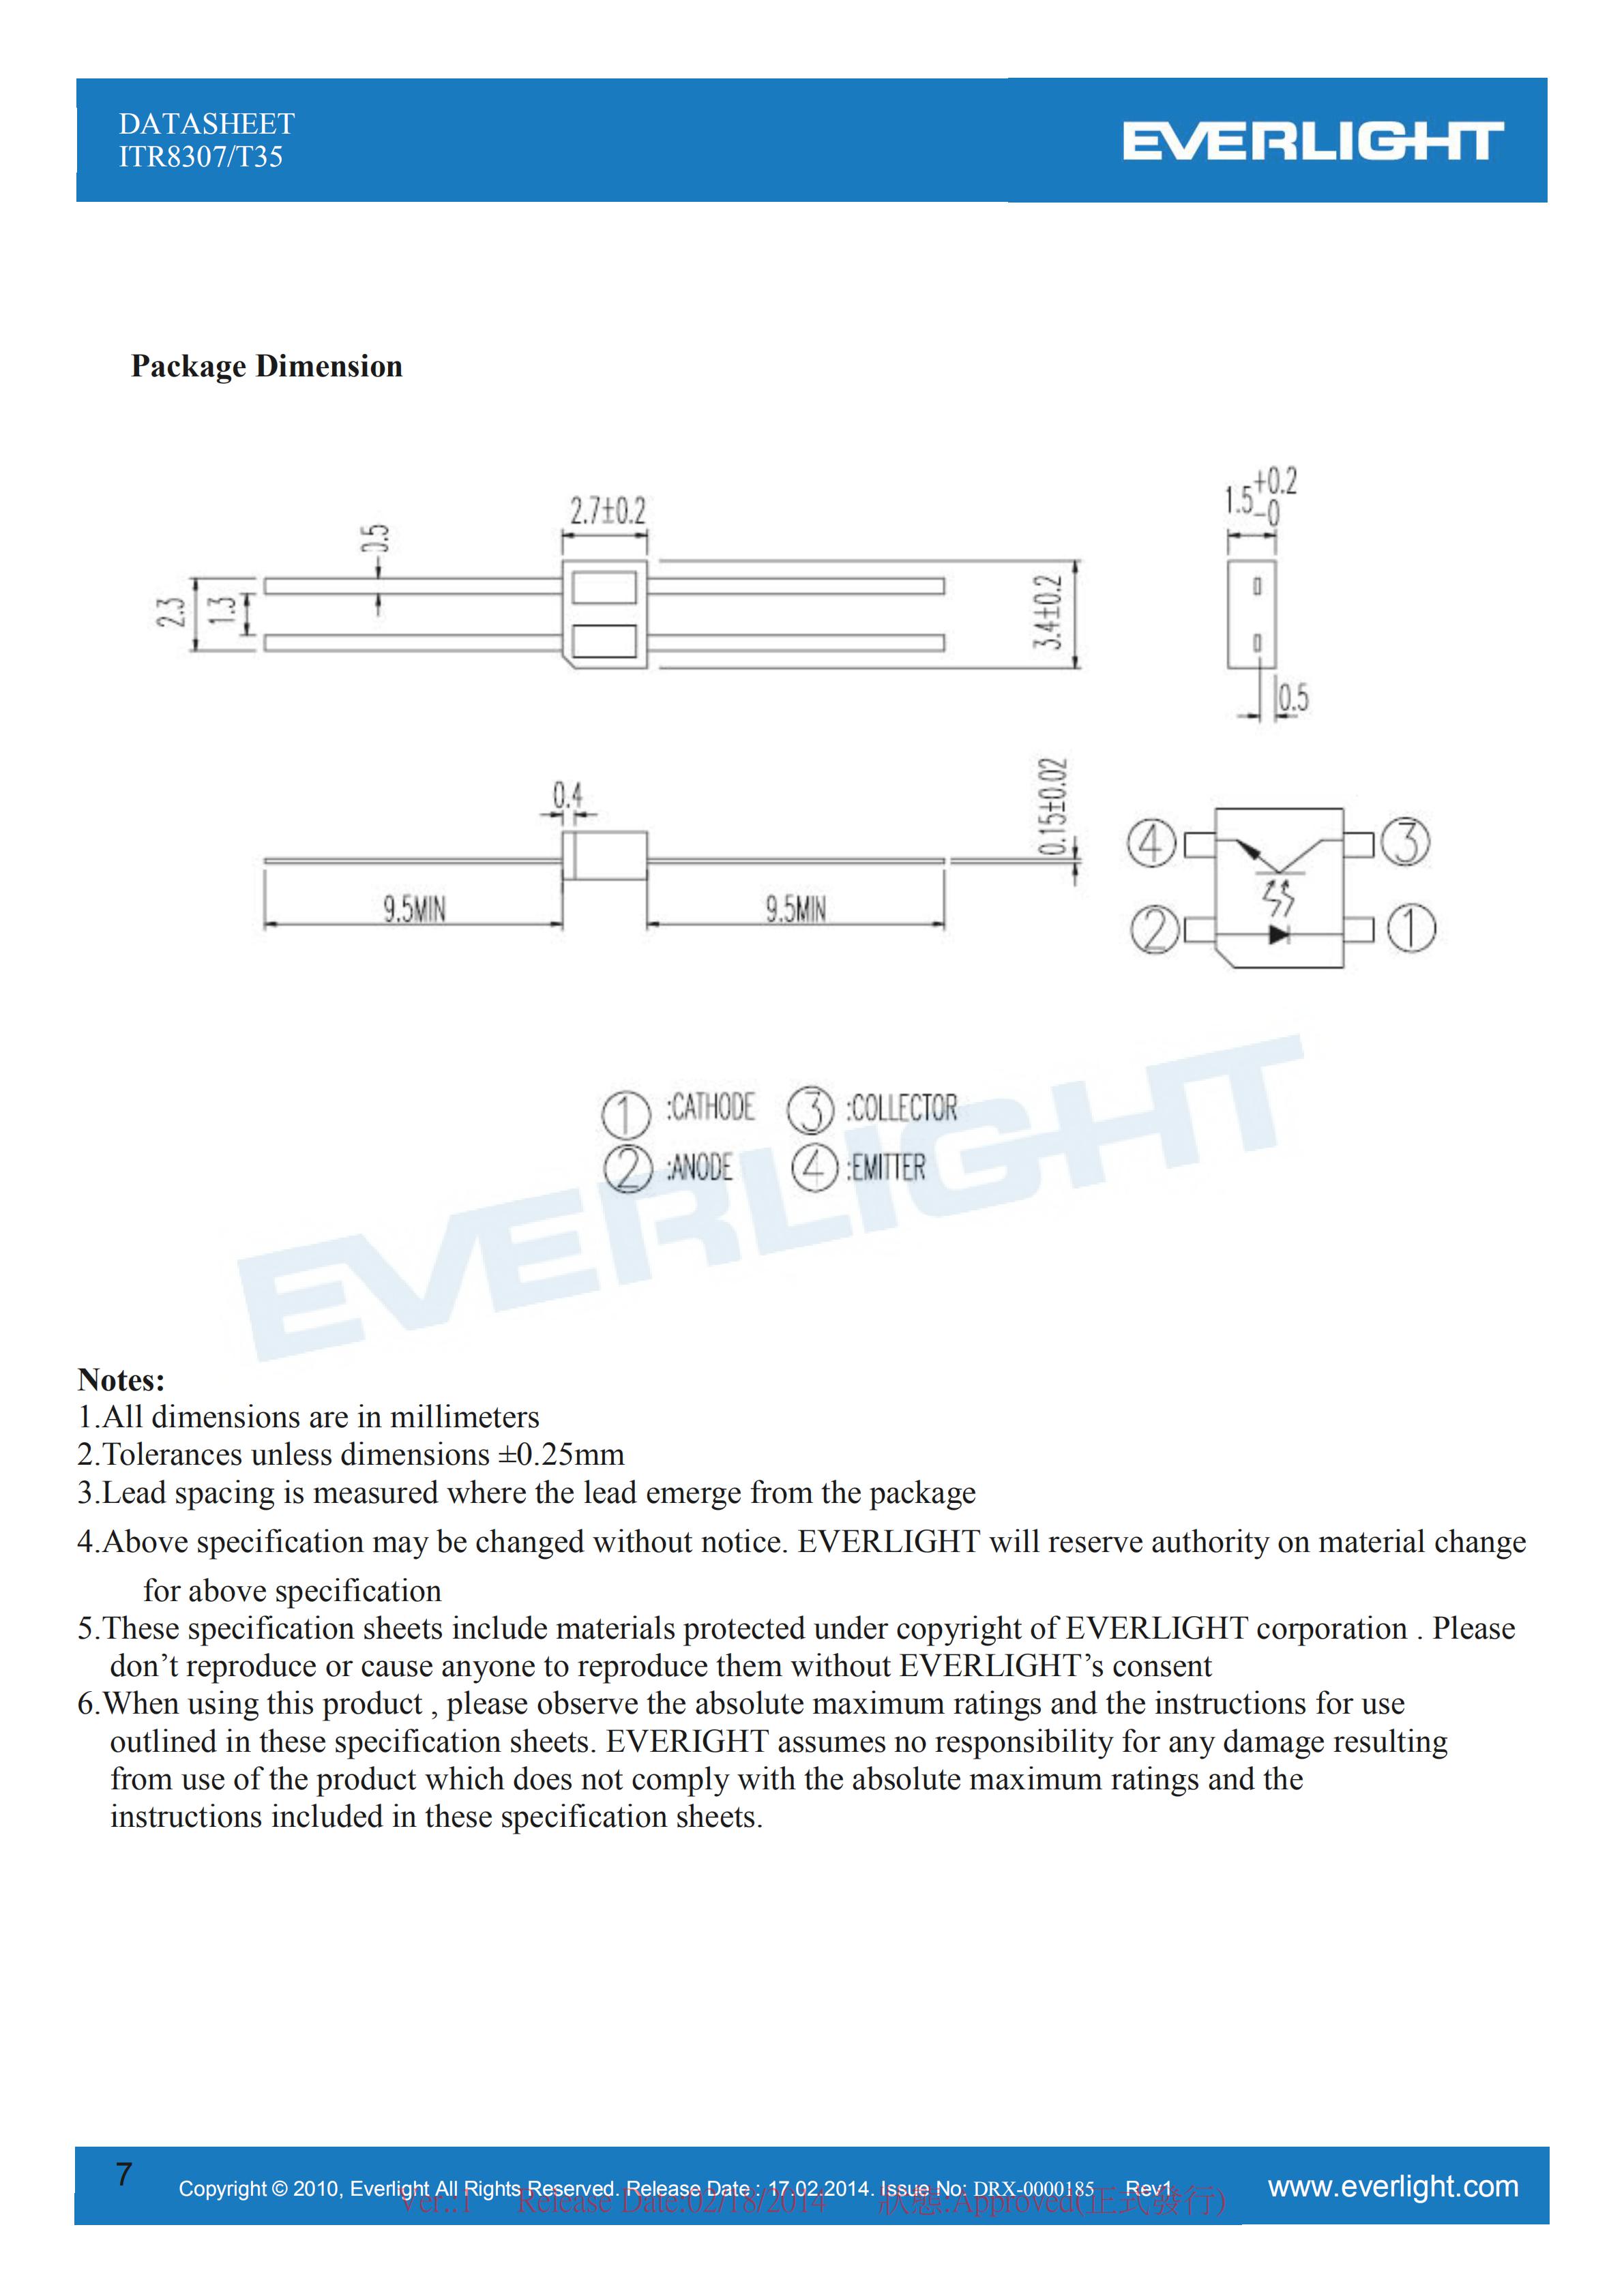 EVERLIGHT Optical Switch ITR8307-T35 Opto Interrupter Datasheet